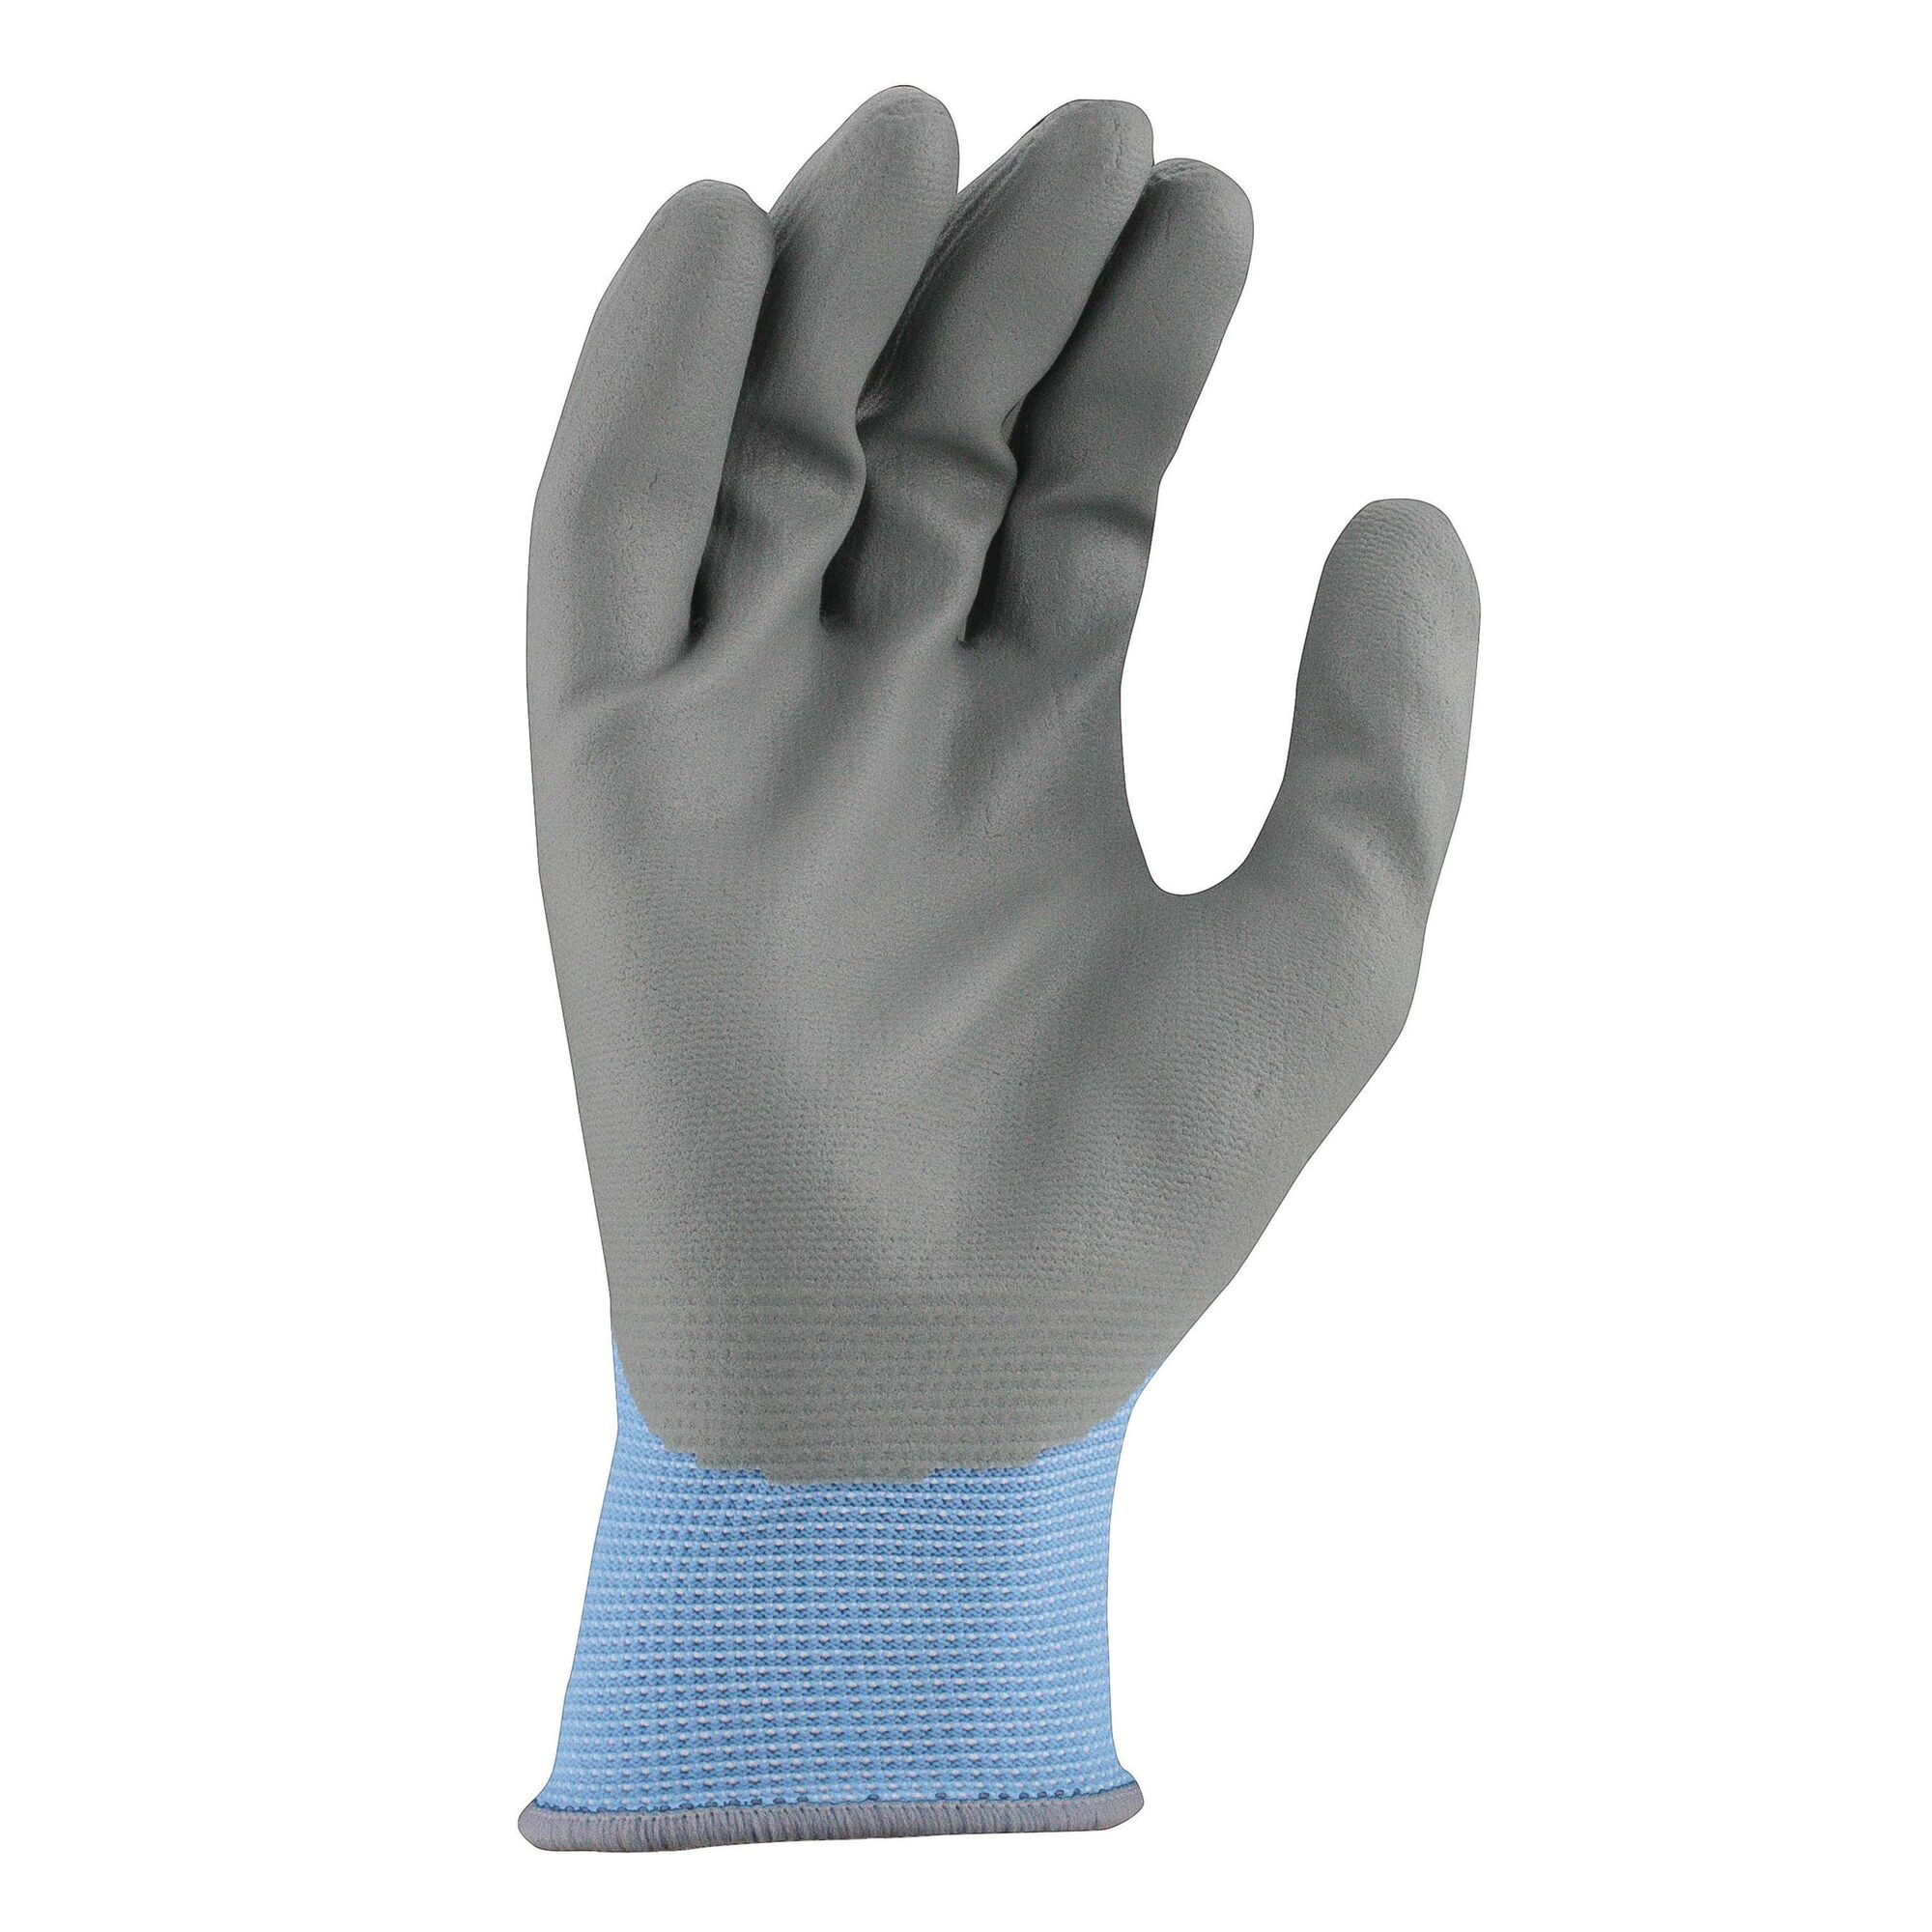 Profile of ladies foam nitrile grip glove.